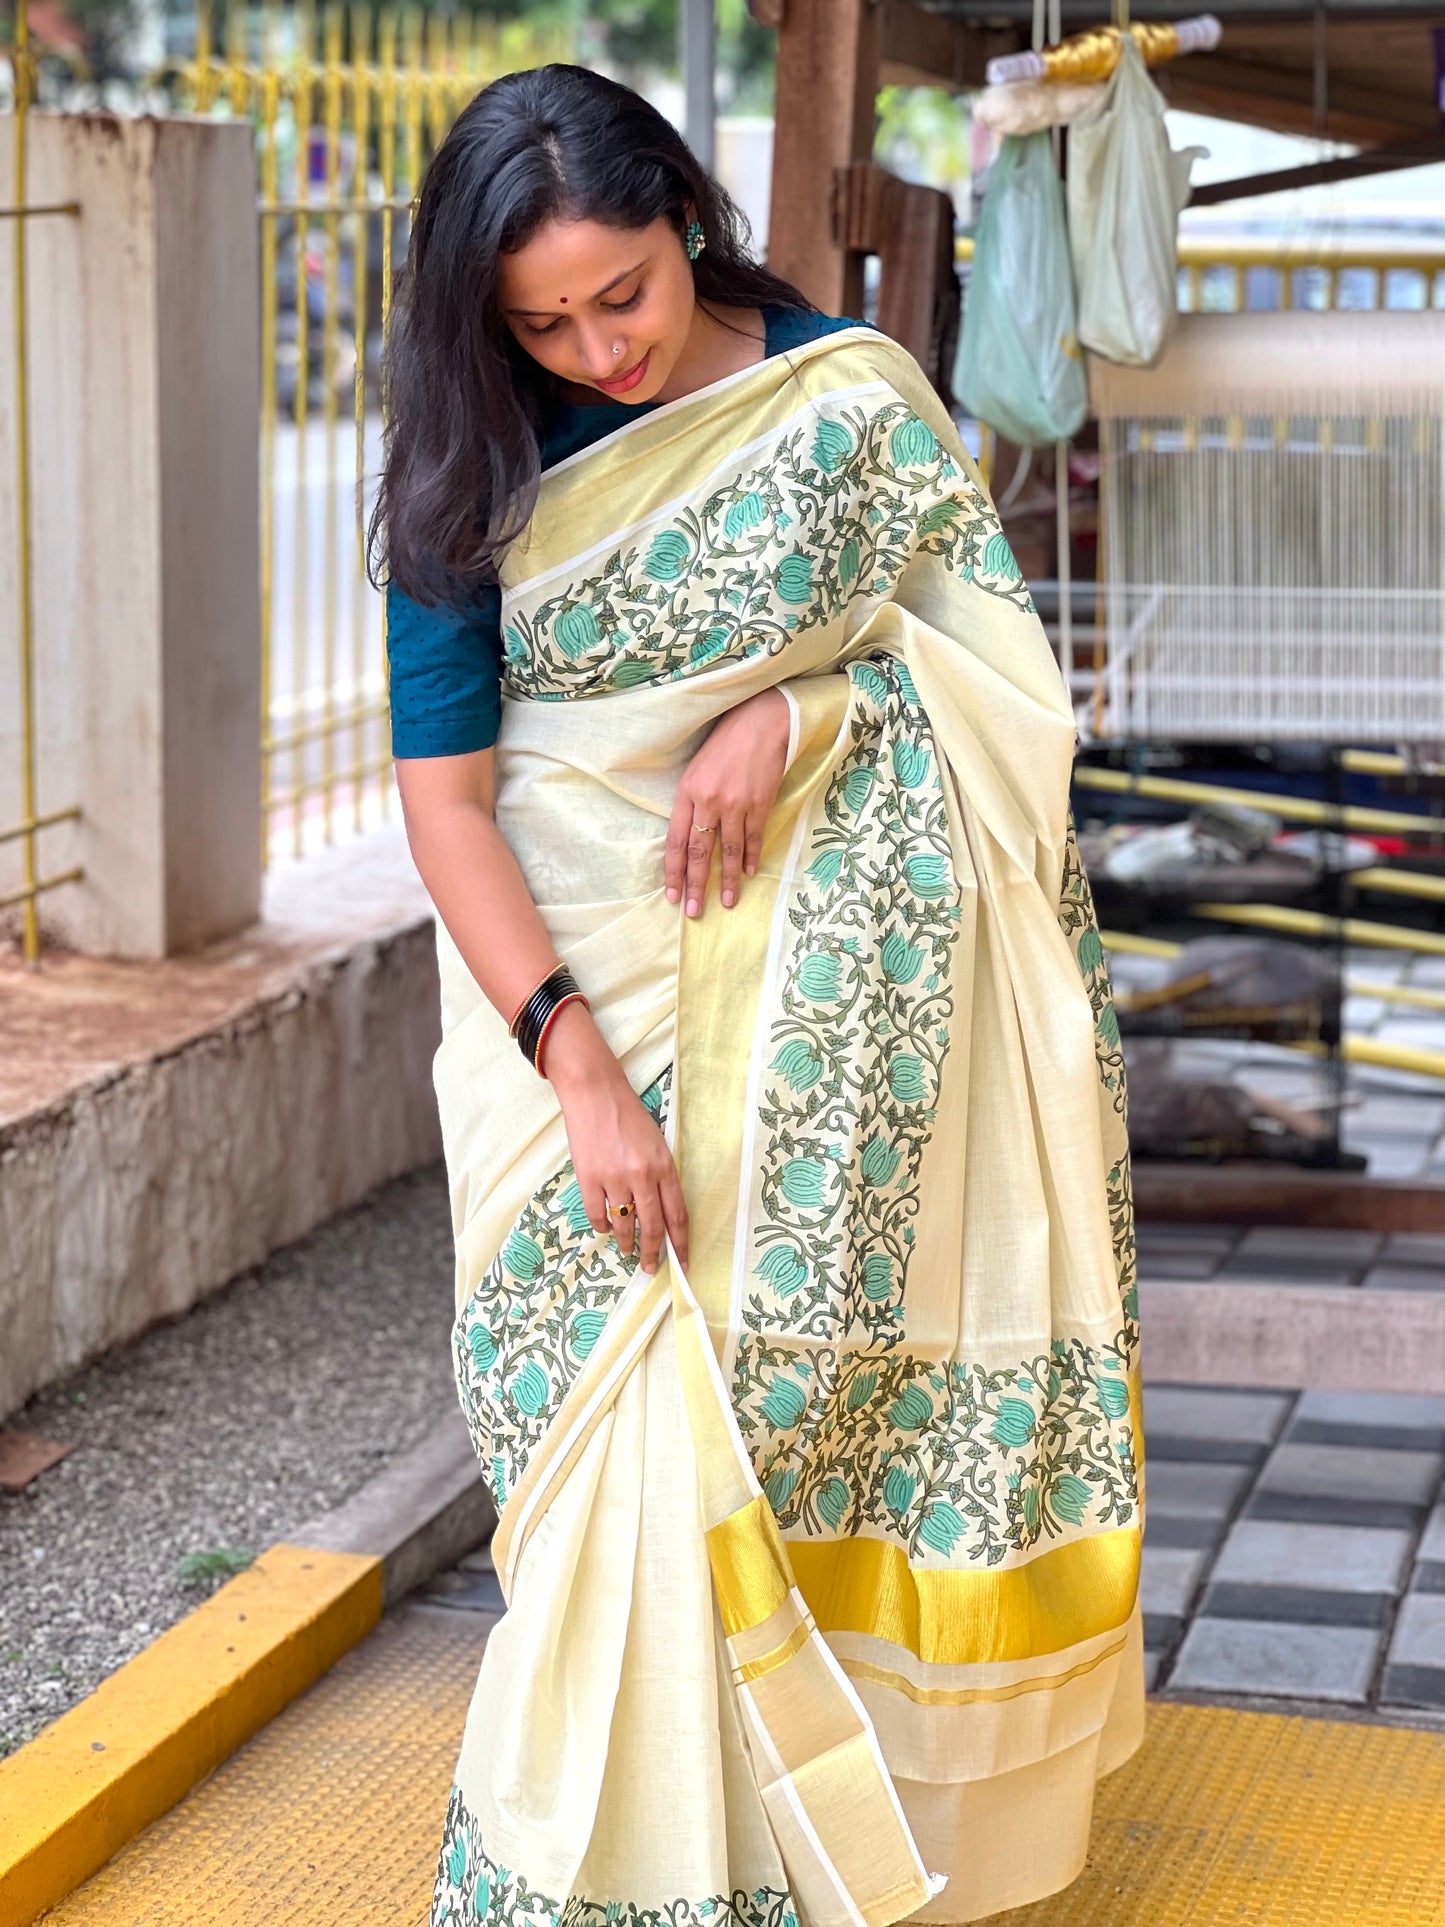 Southloom Jaipur Artisans & Kerala Weavers Collab Turquoise Floral Printed Tissue Kasavu Saree (2023 Onam Exclusive Kerala Saree)